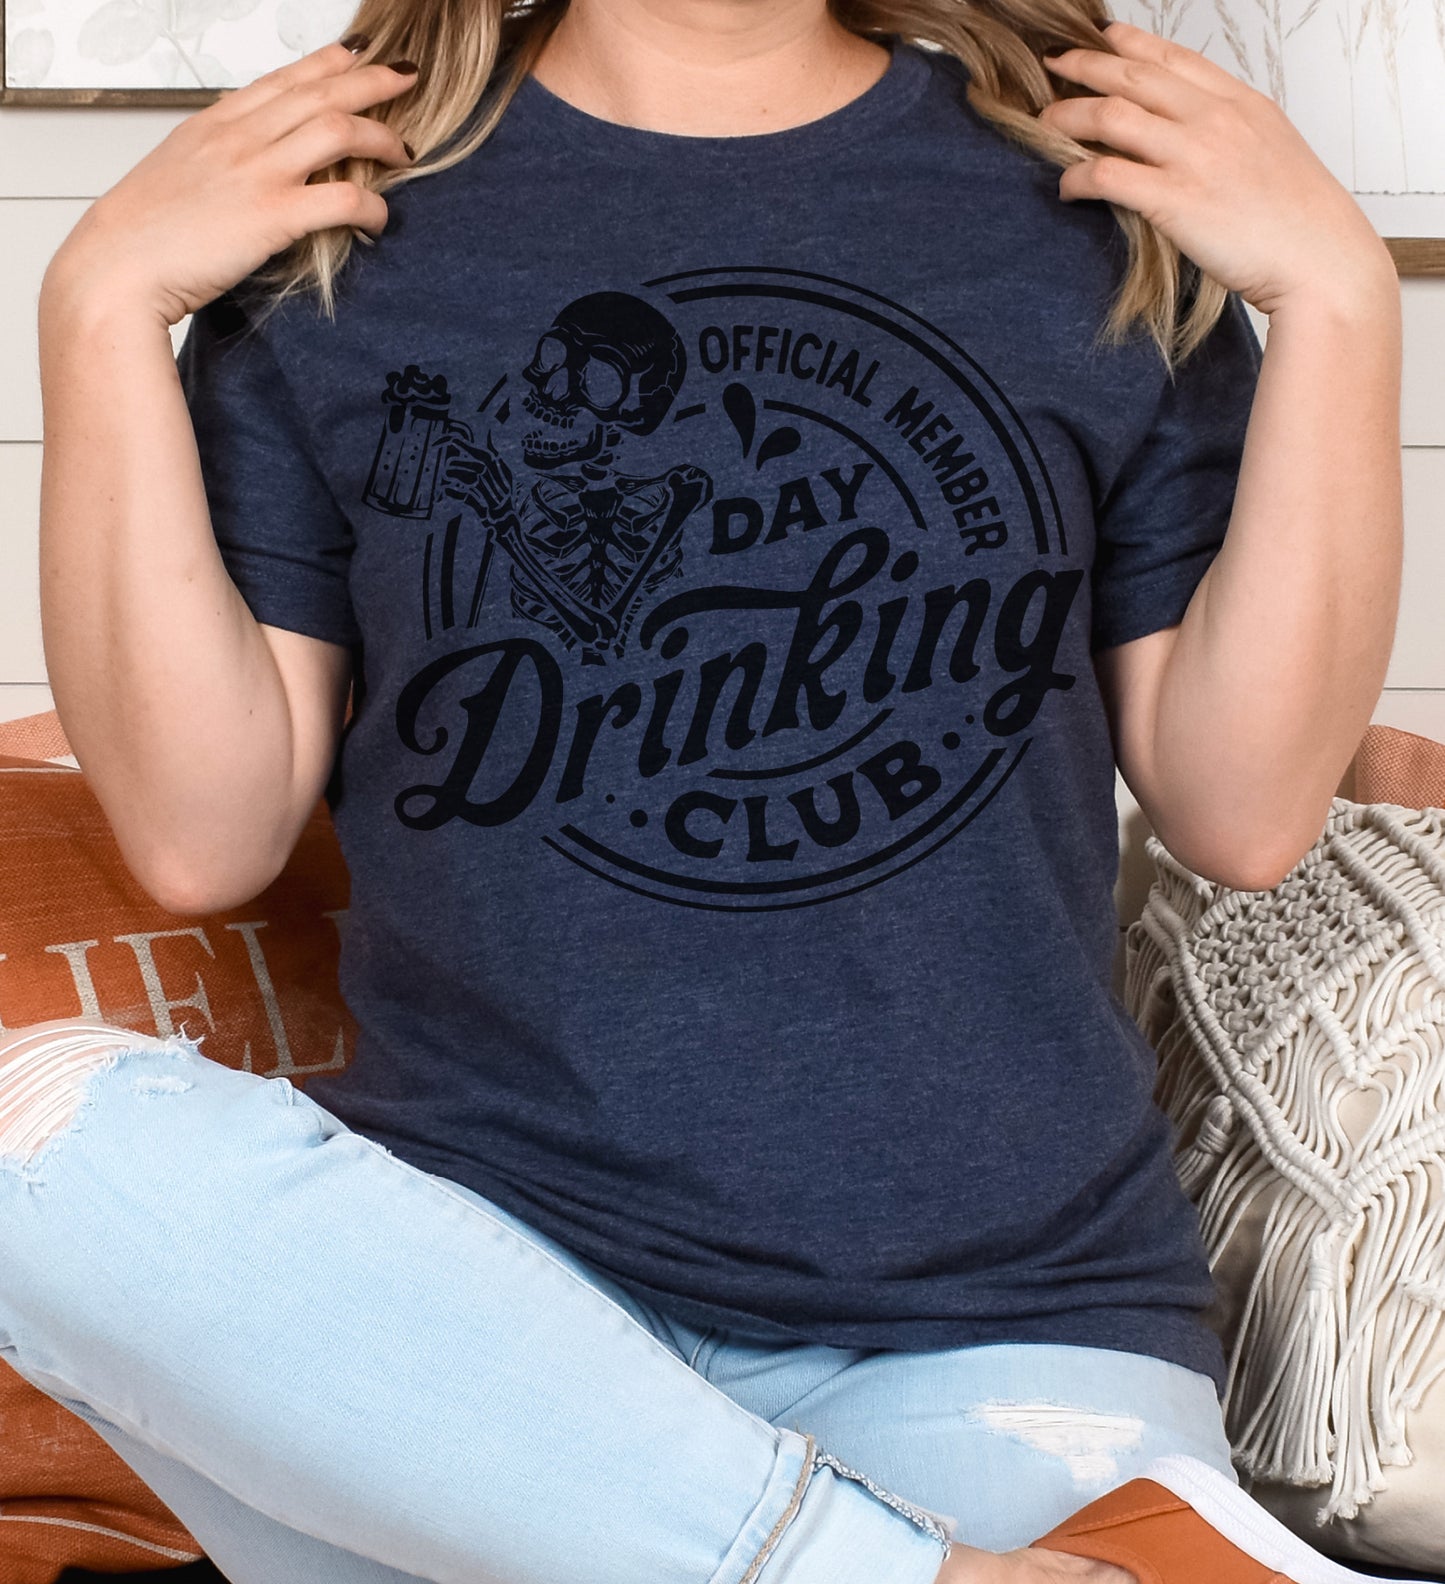 Day Drinking Club T-Shirt Sarcastic Funny Tshirt Hilarious Sarcasm Tee Funny Sarcastic Shirt